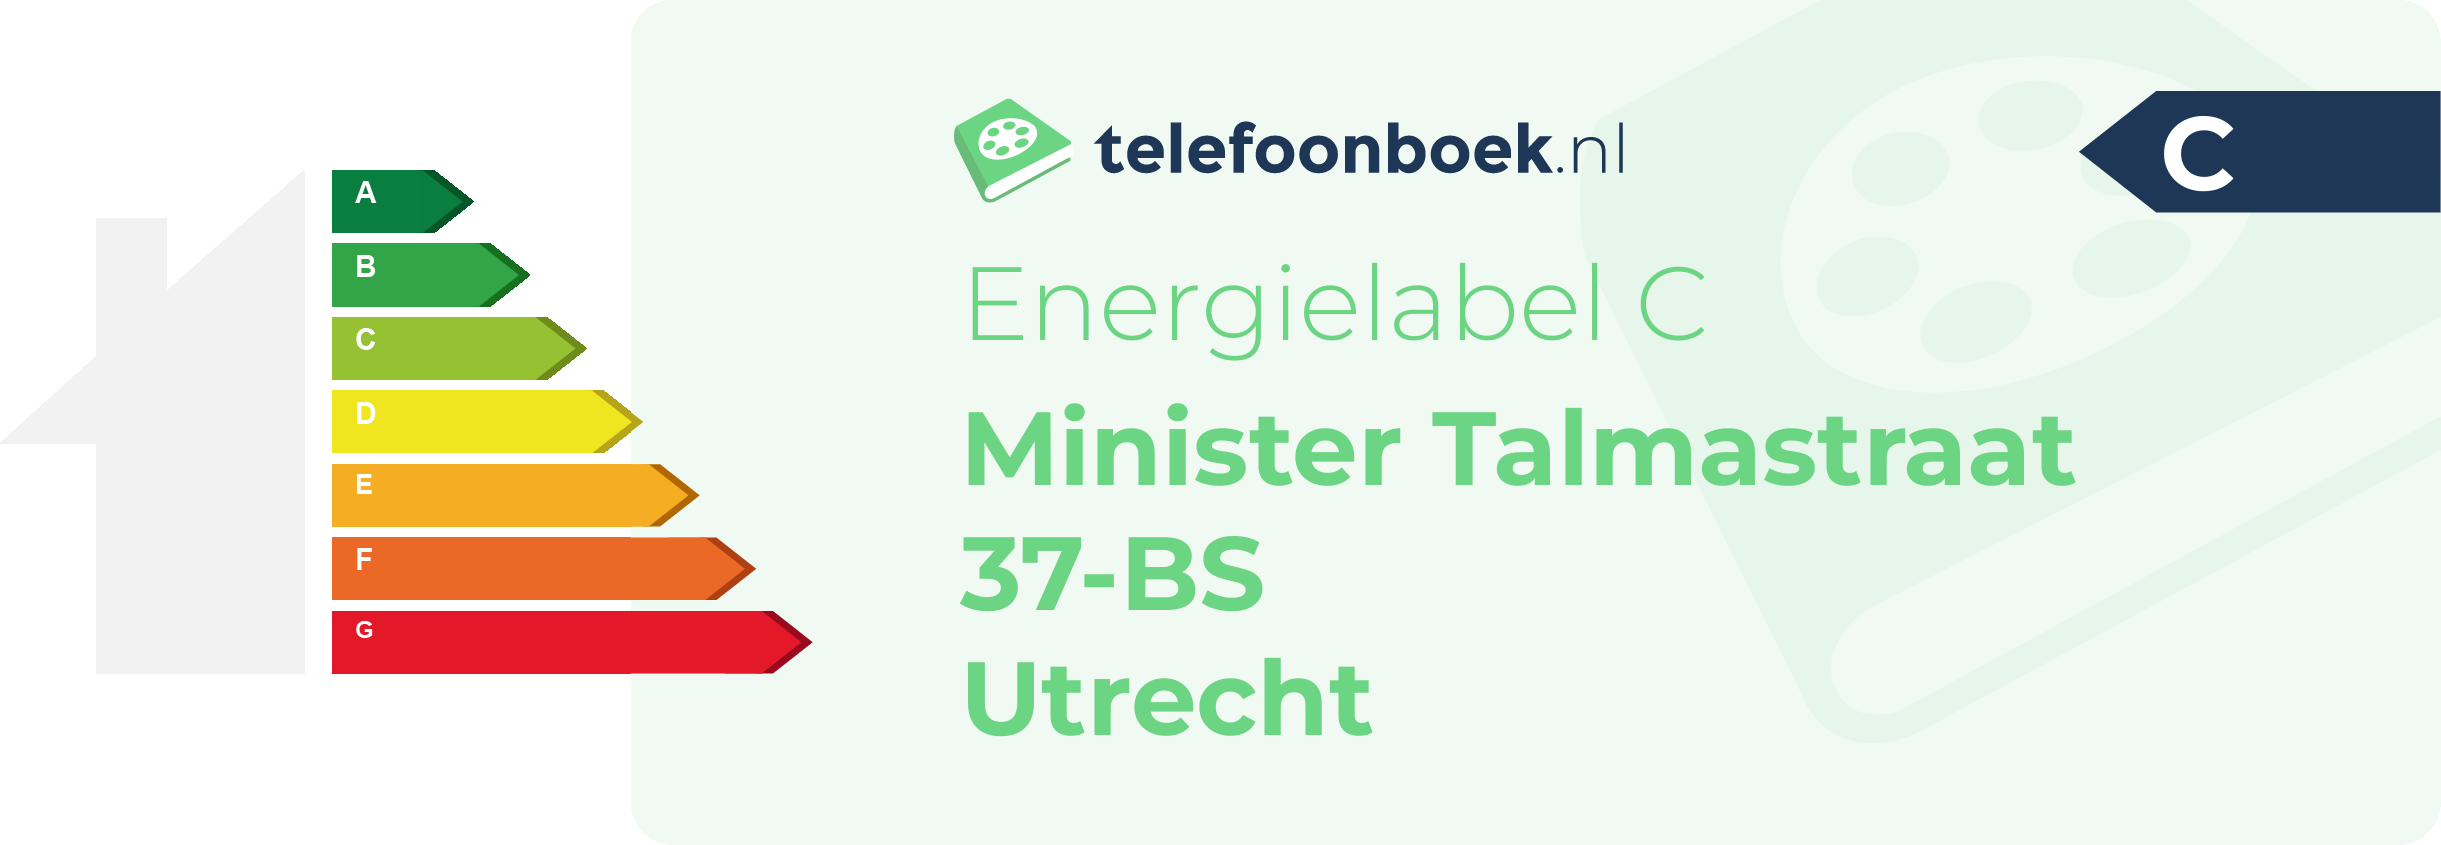 Energielabel Minister Talmastraat 37-BS Utrecht